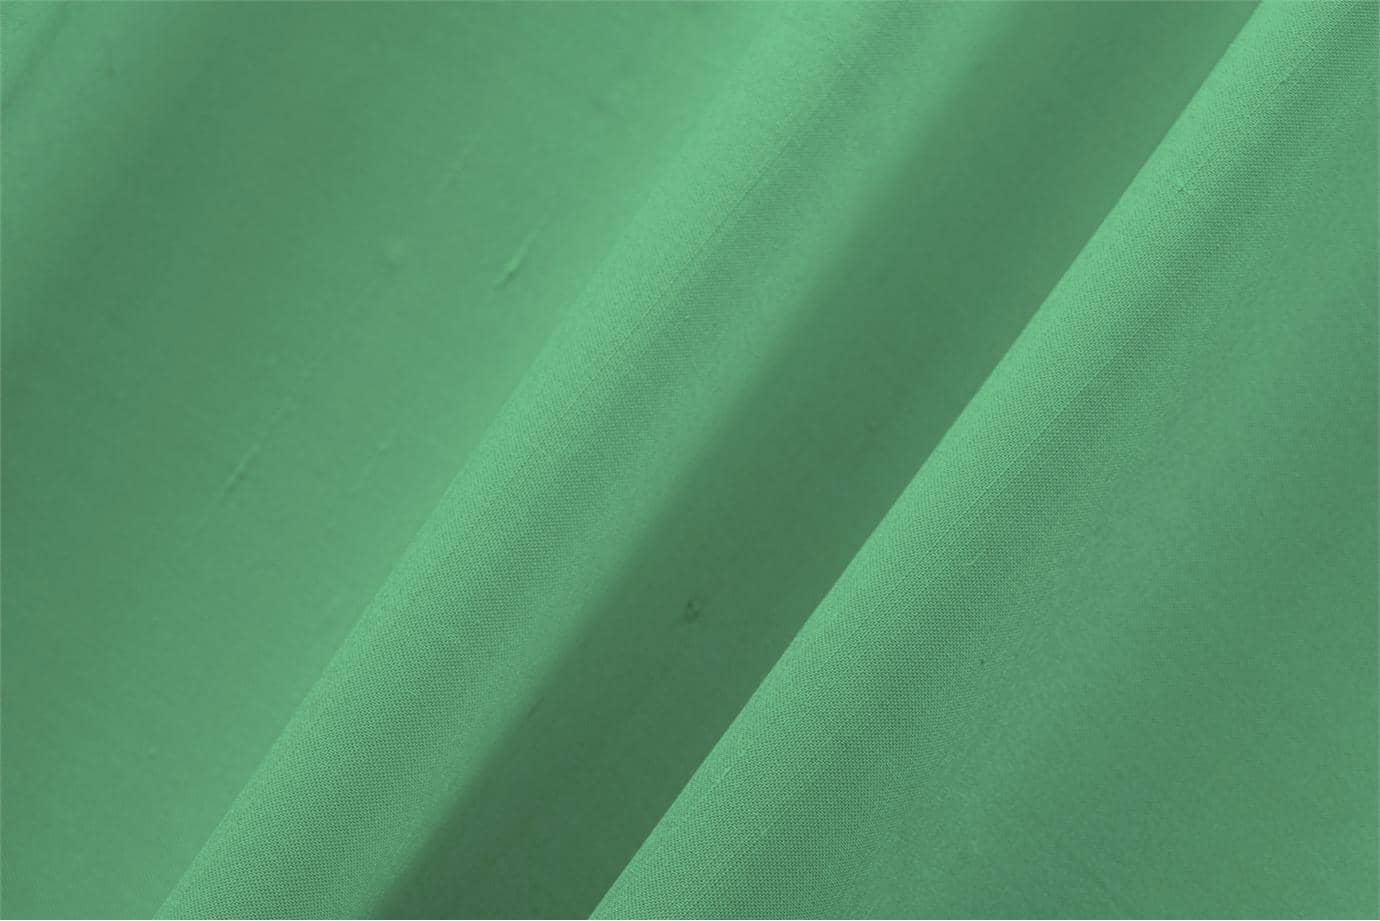 Fern Green Cotton, Silk Double Shantung fabric for dressmaking